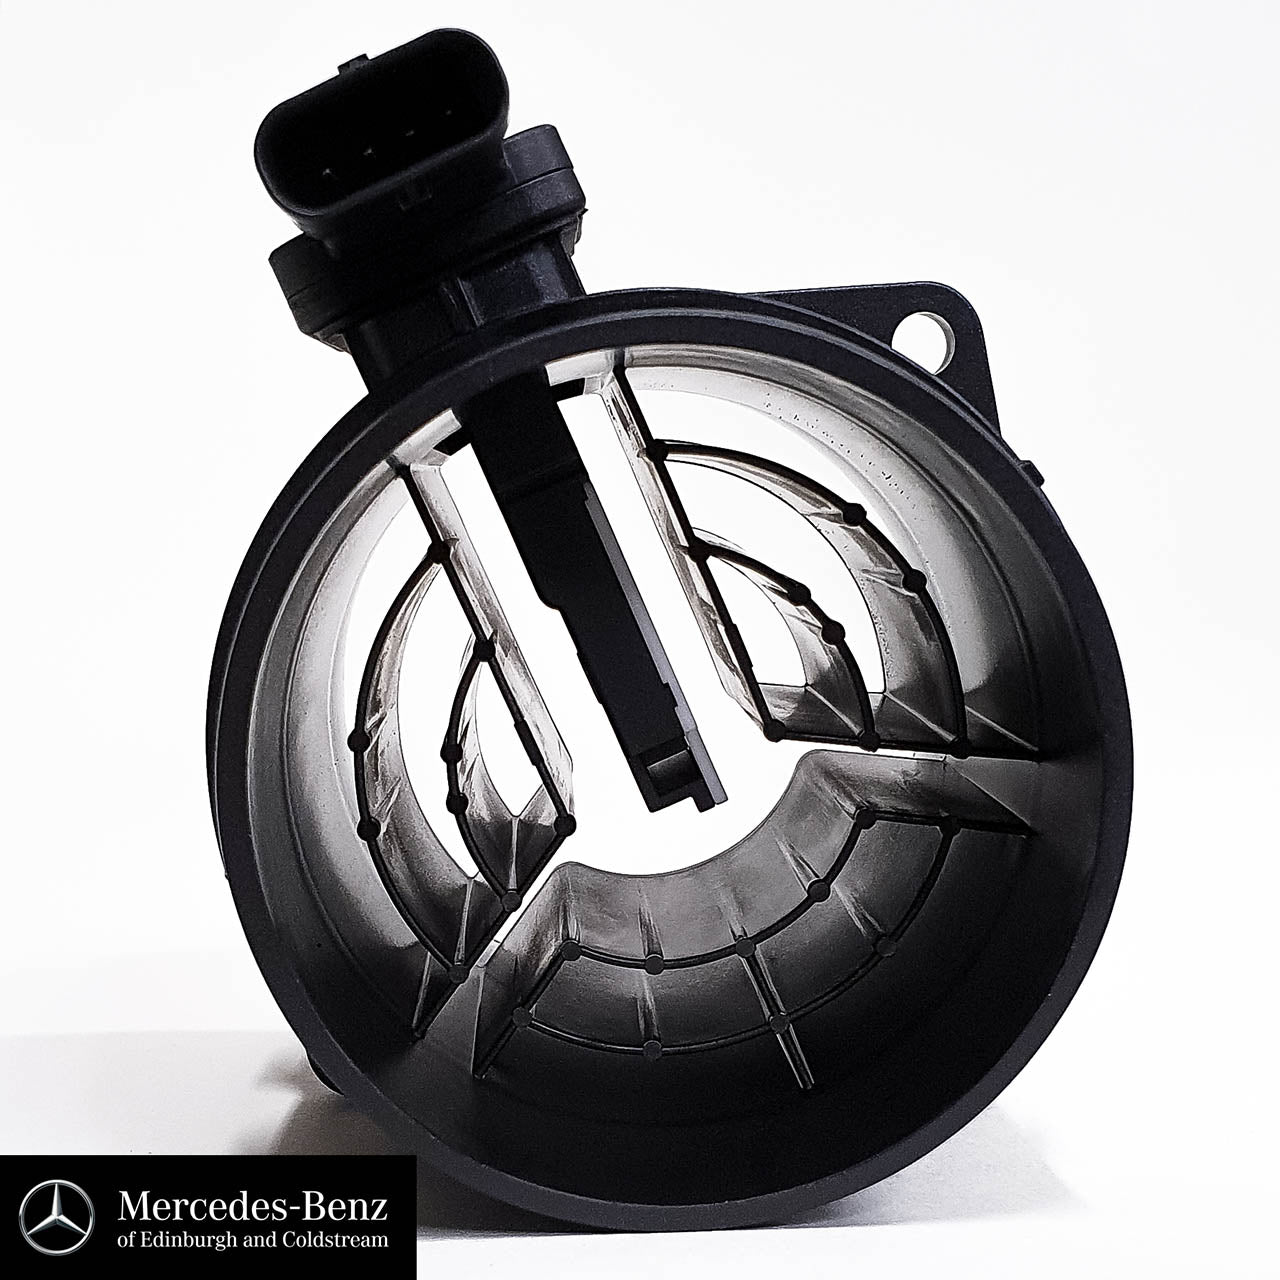 Genuine Mercedes-Benz mass air flow sensor